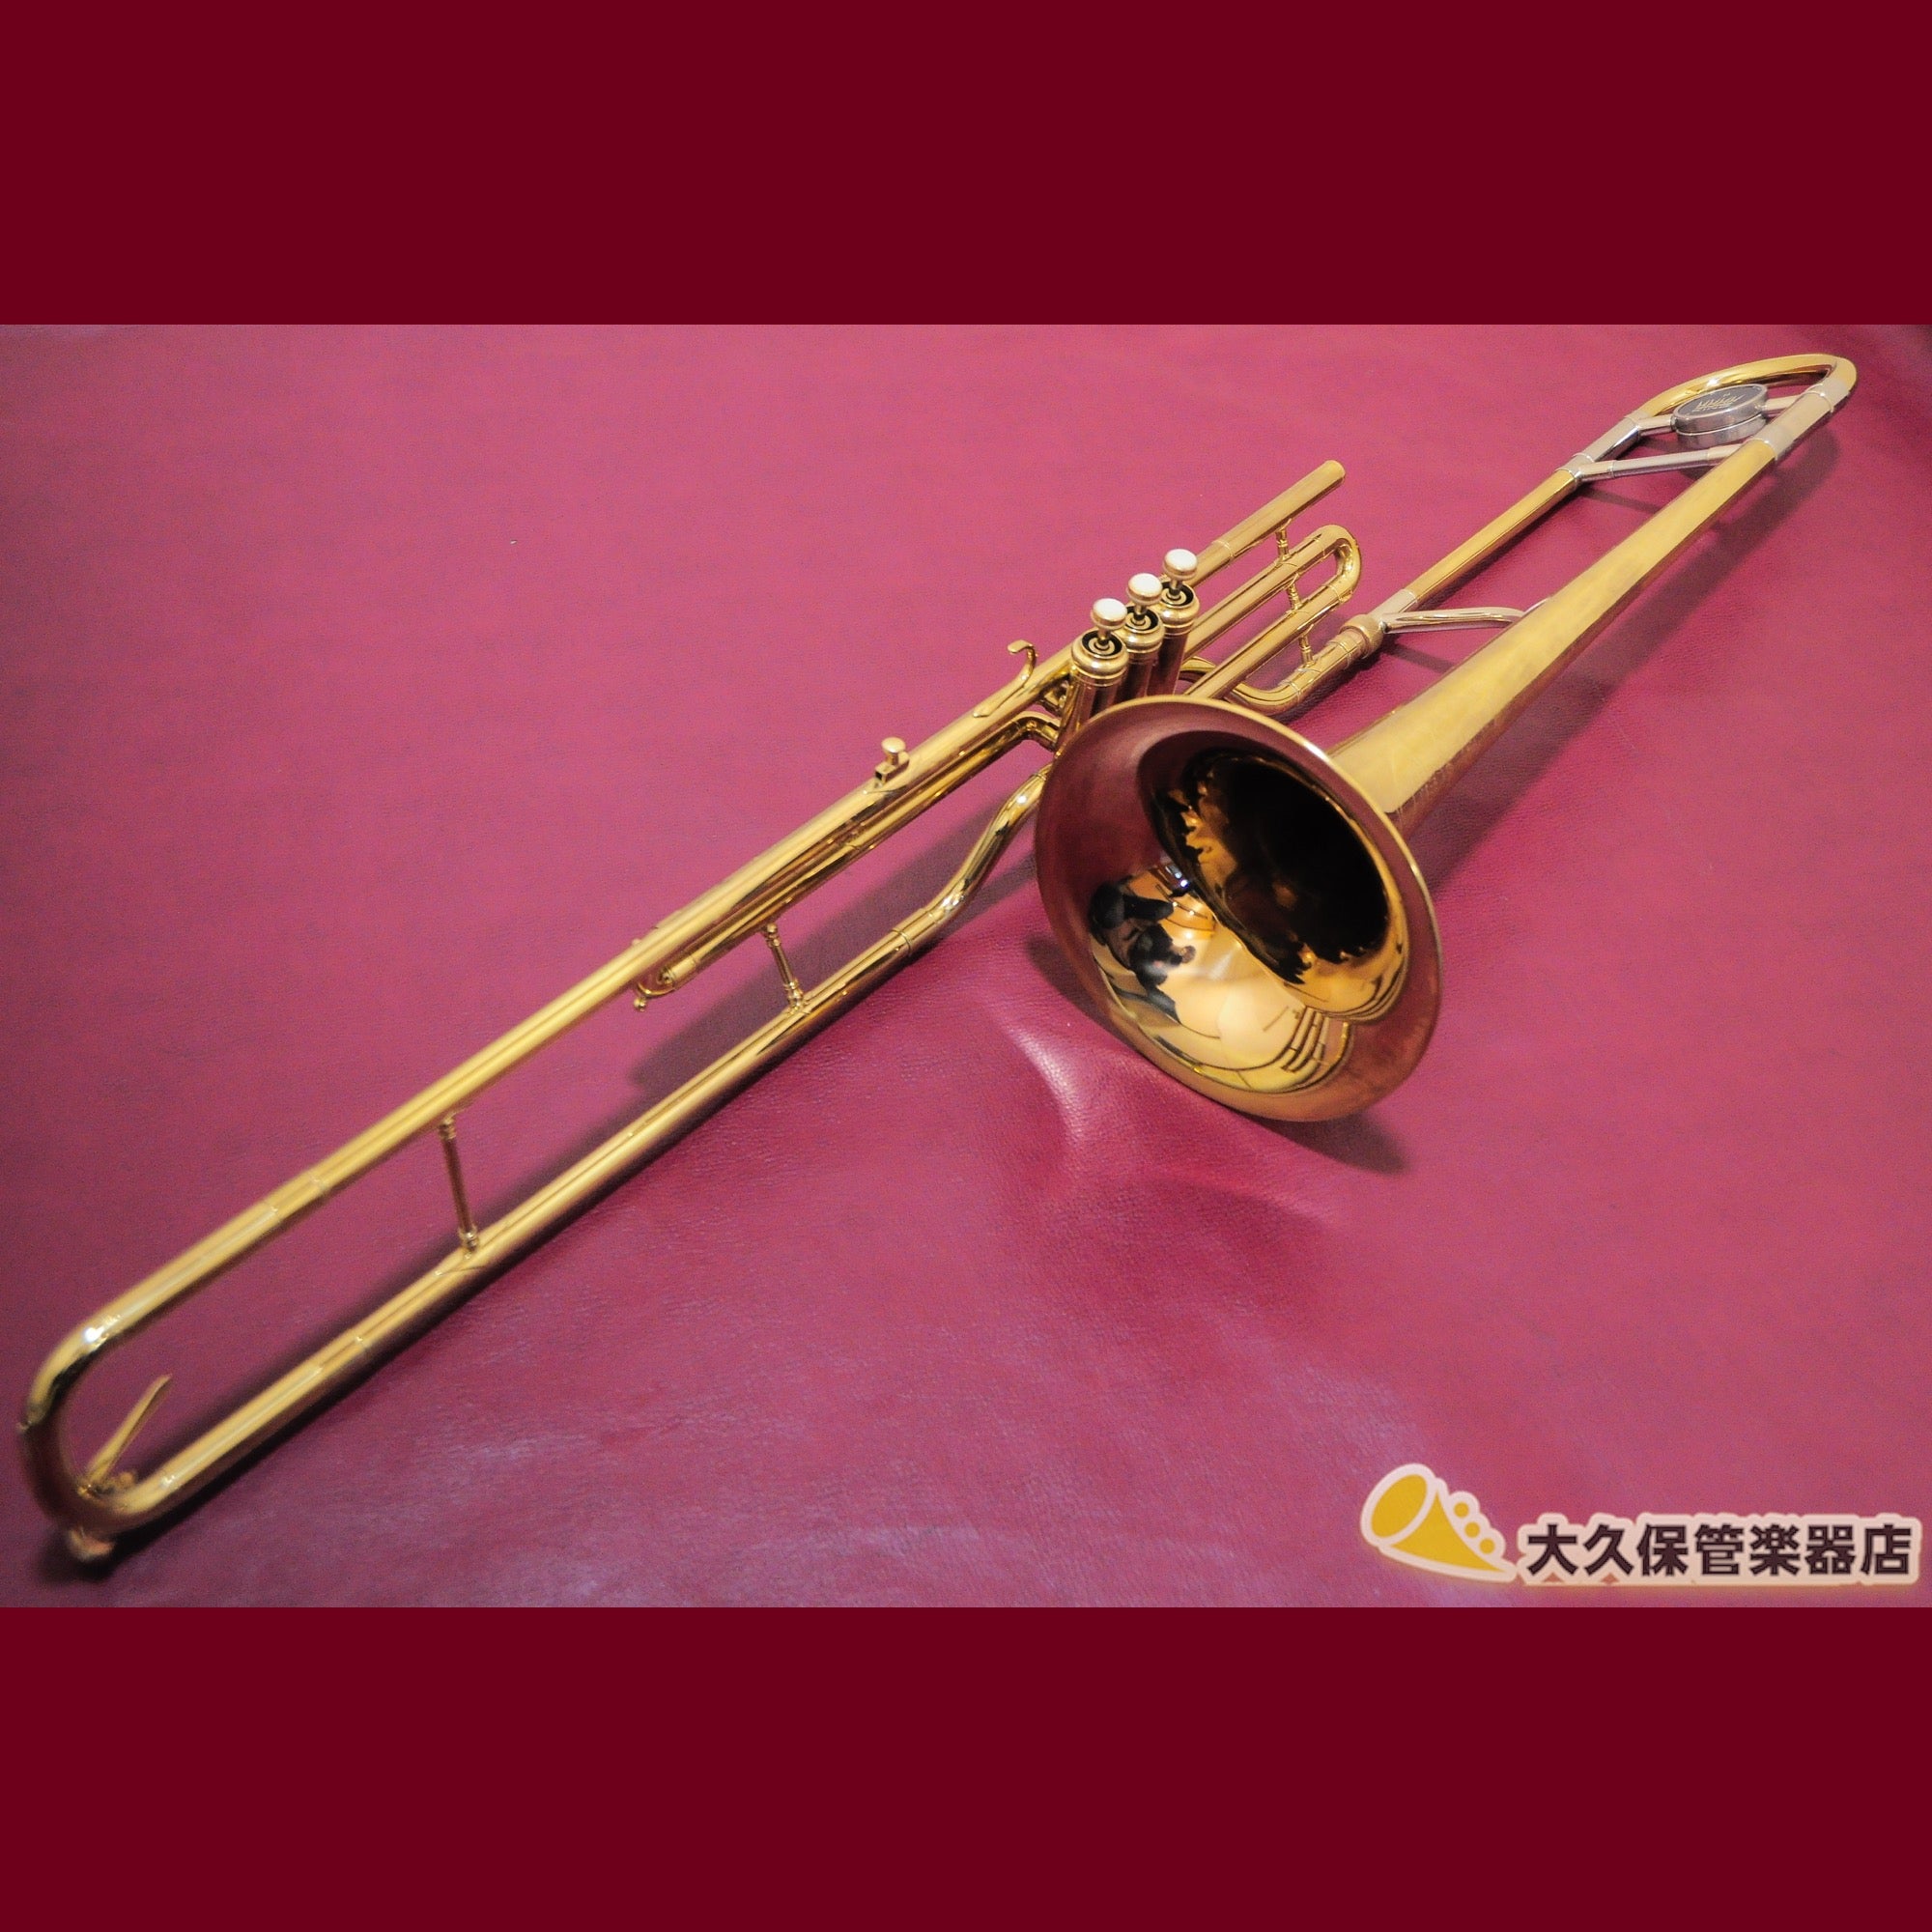 Lotus trumpet mouthpiece, 2nd generation